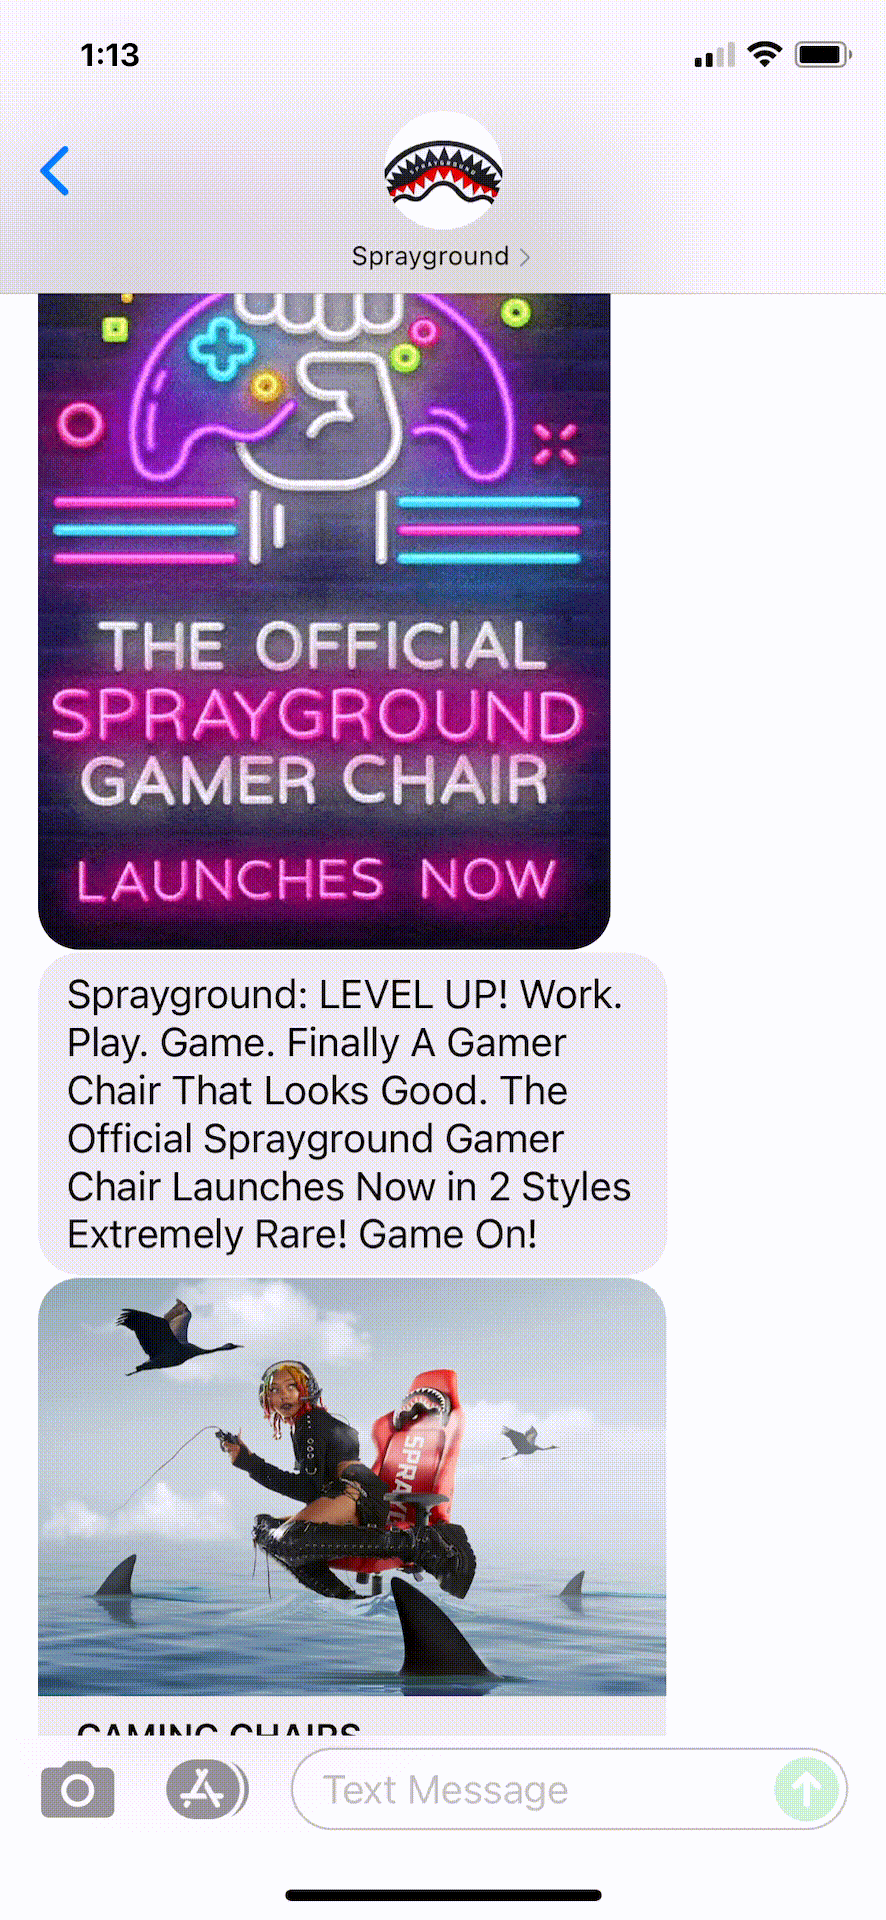 Sprayground-Text-Message-Marketing-Example-07.19.2021